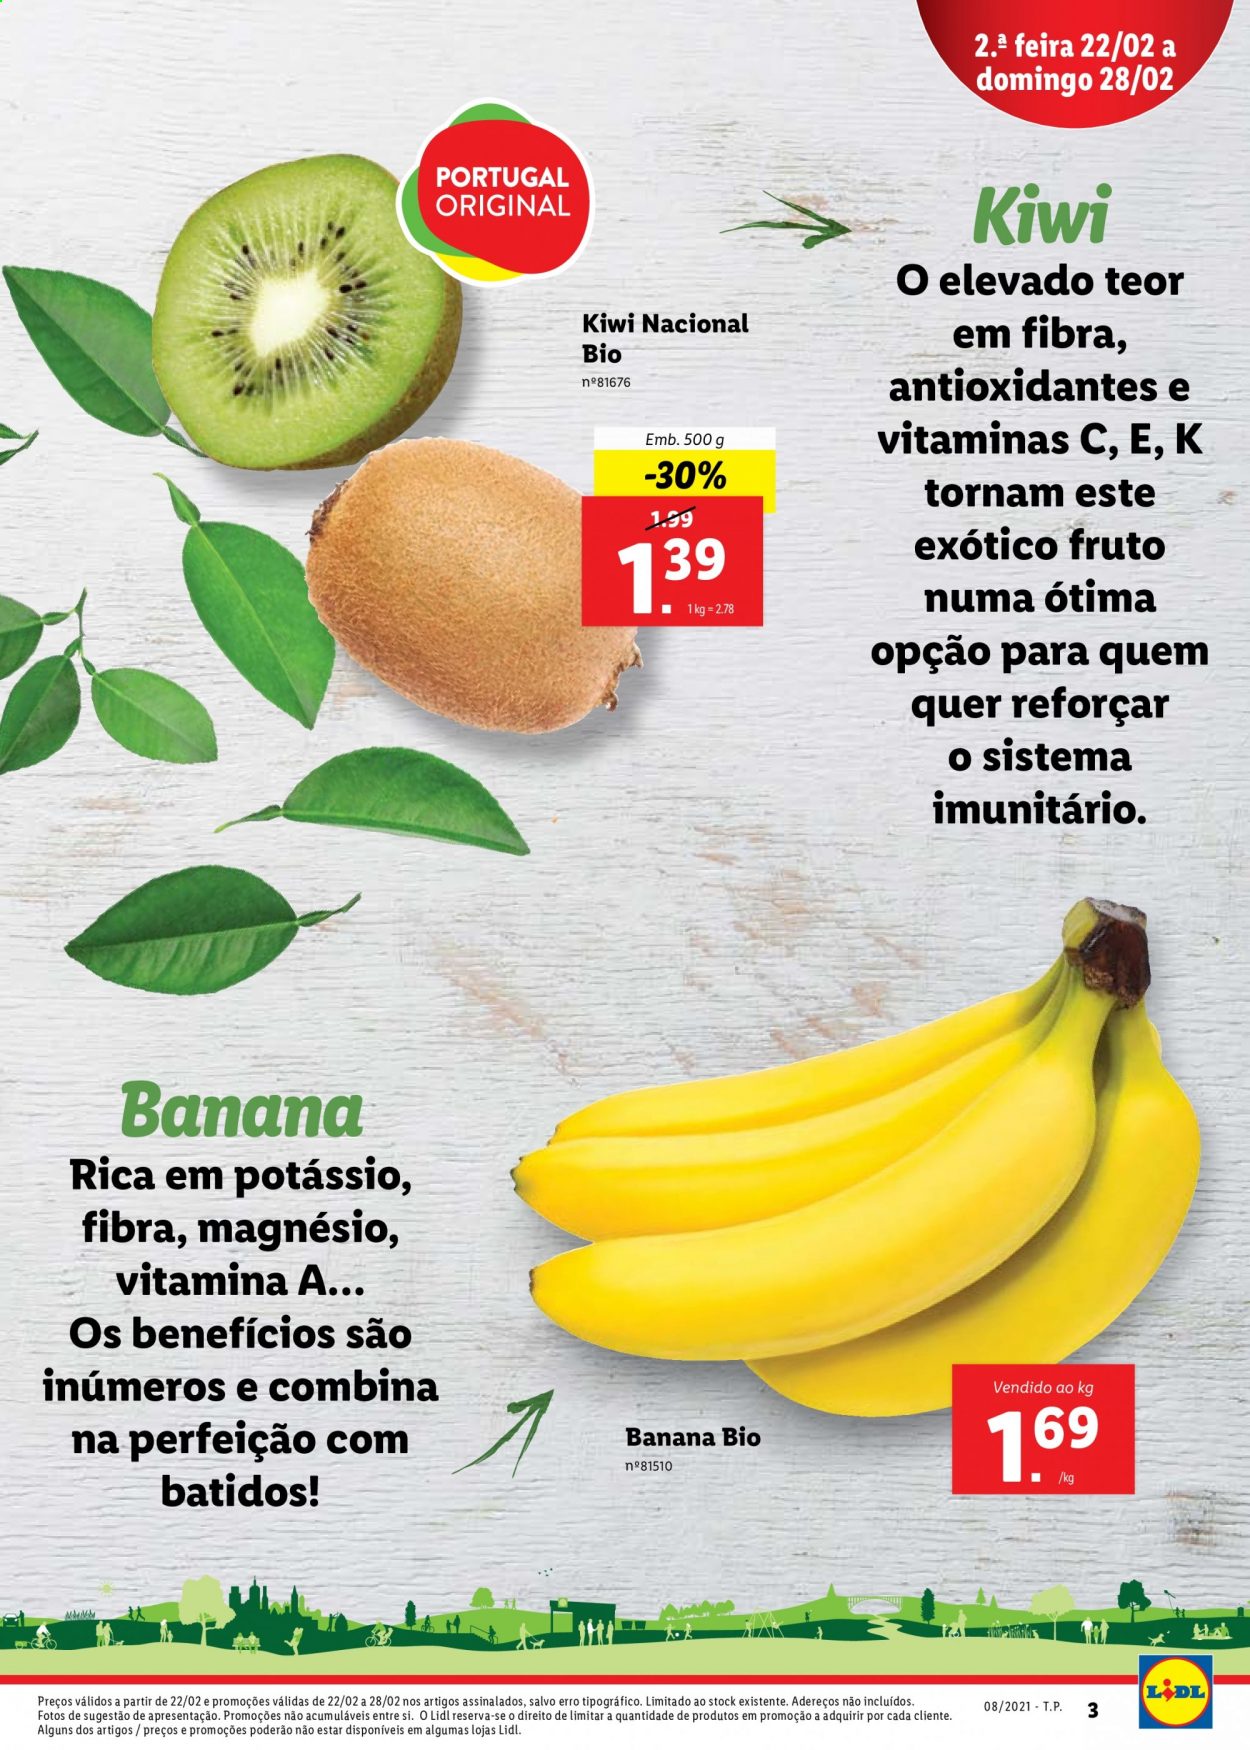 thumbnail - Folheto Lidl - 22.2.2021 - 28.2.2021 - Produtos em promoção - banana, kiwi. Página 3.